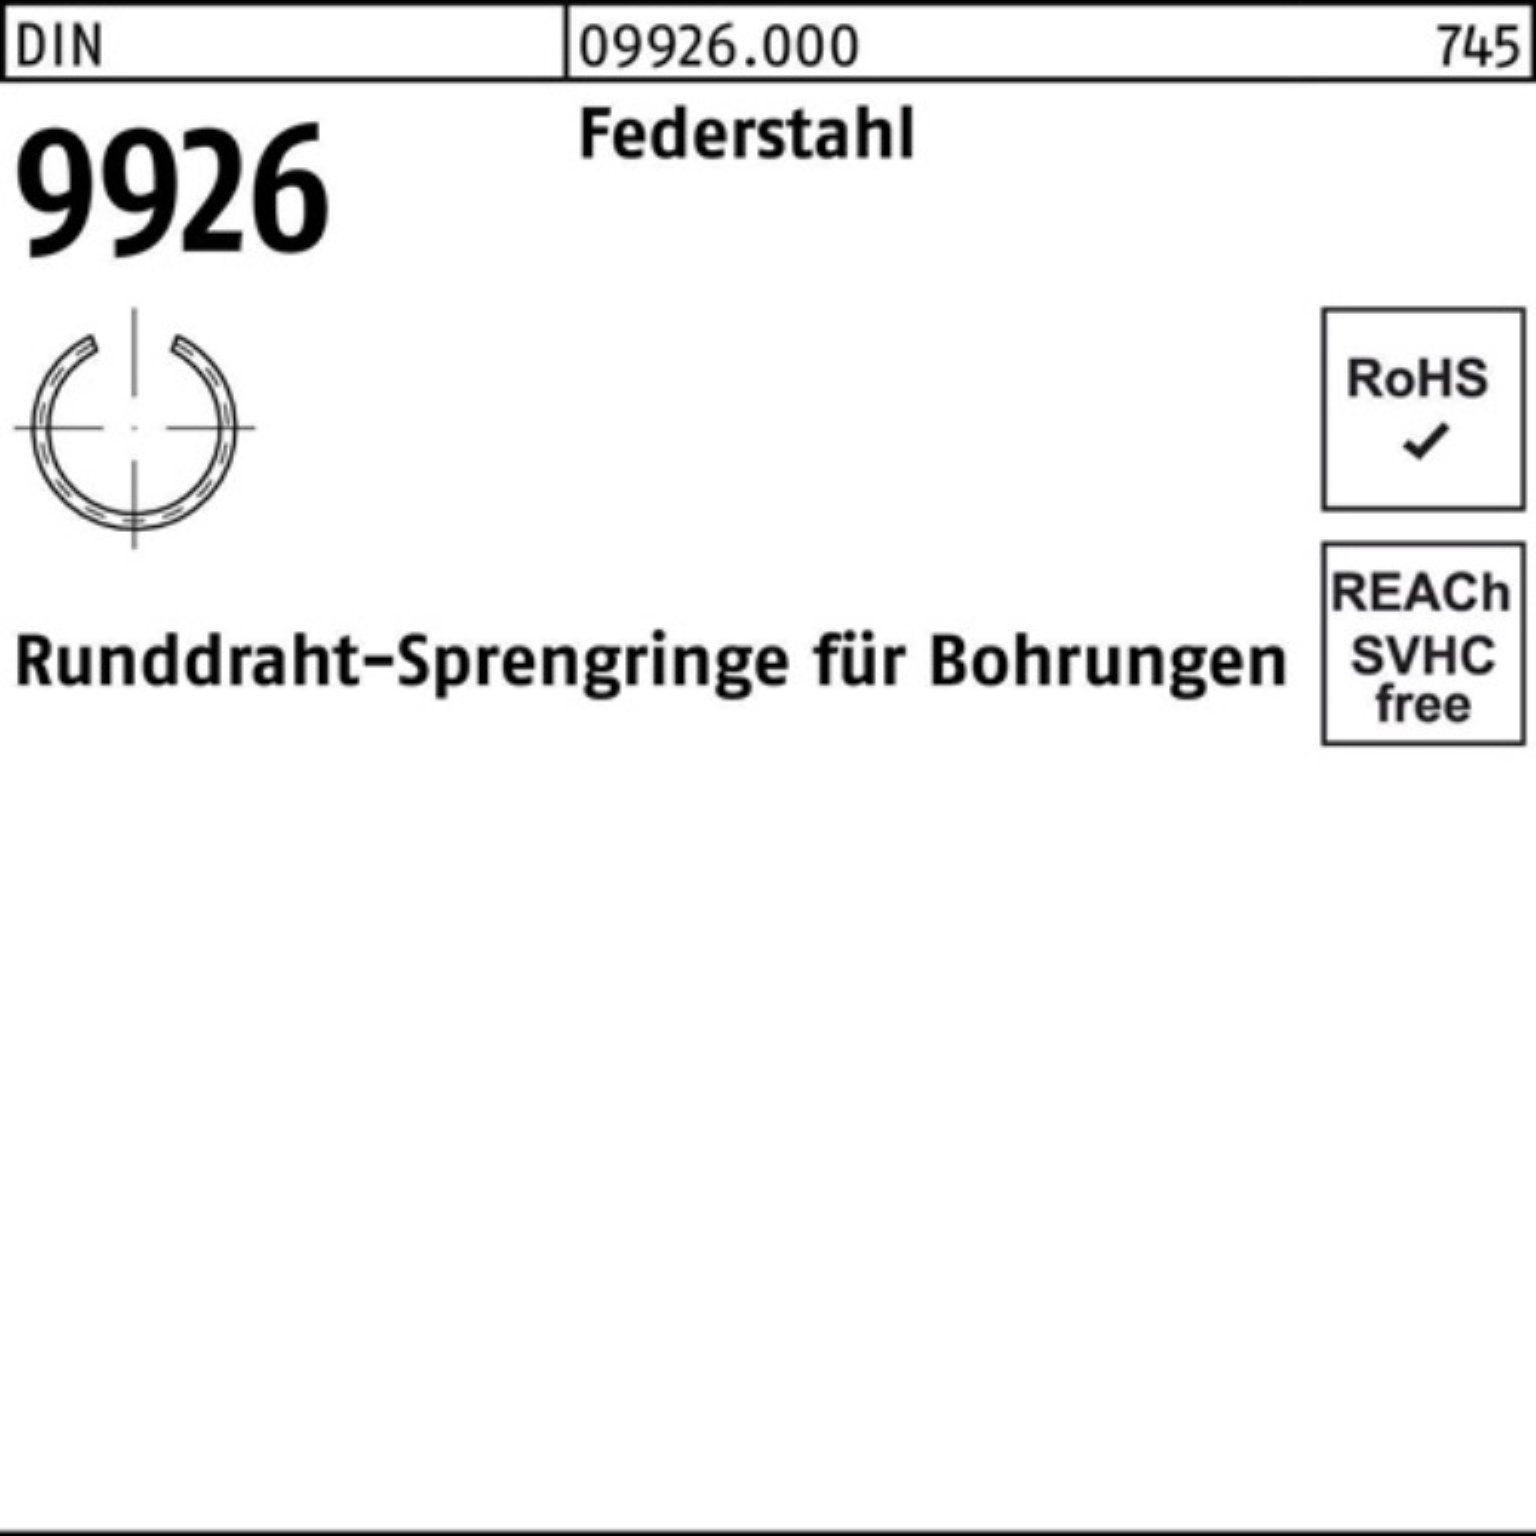 9926 DIN 2000 Runddraht Sprengring Stück DI Reyher 16 Federstahl Pack Sprengring 2000er